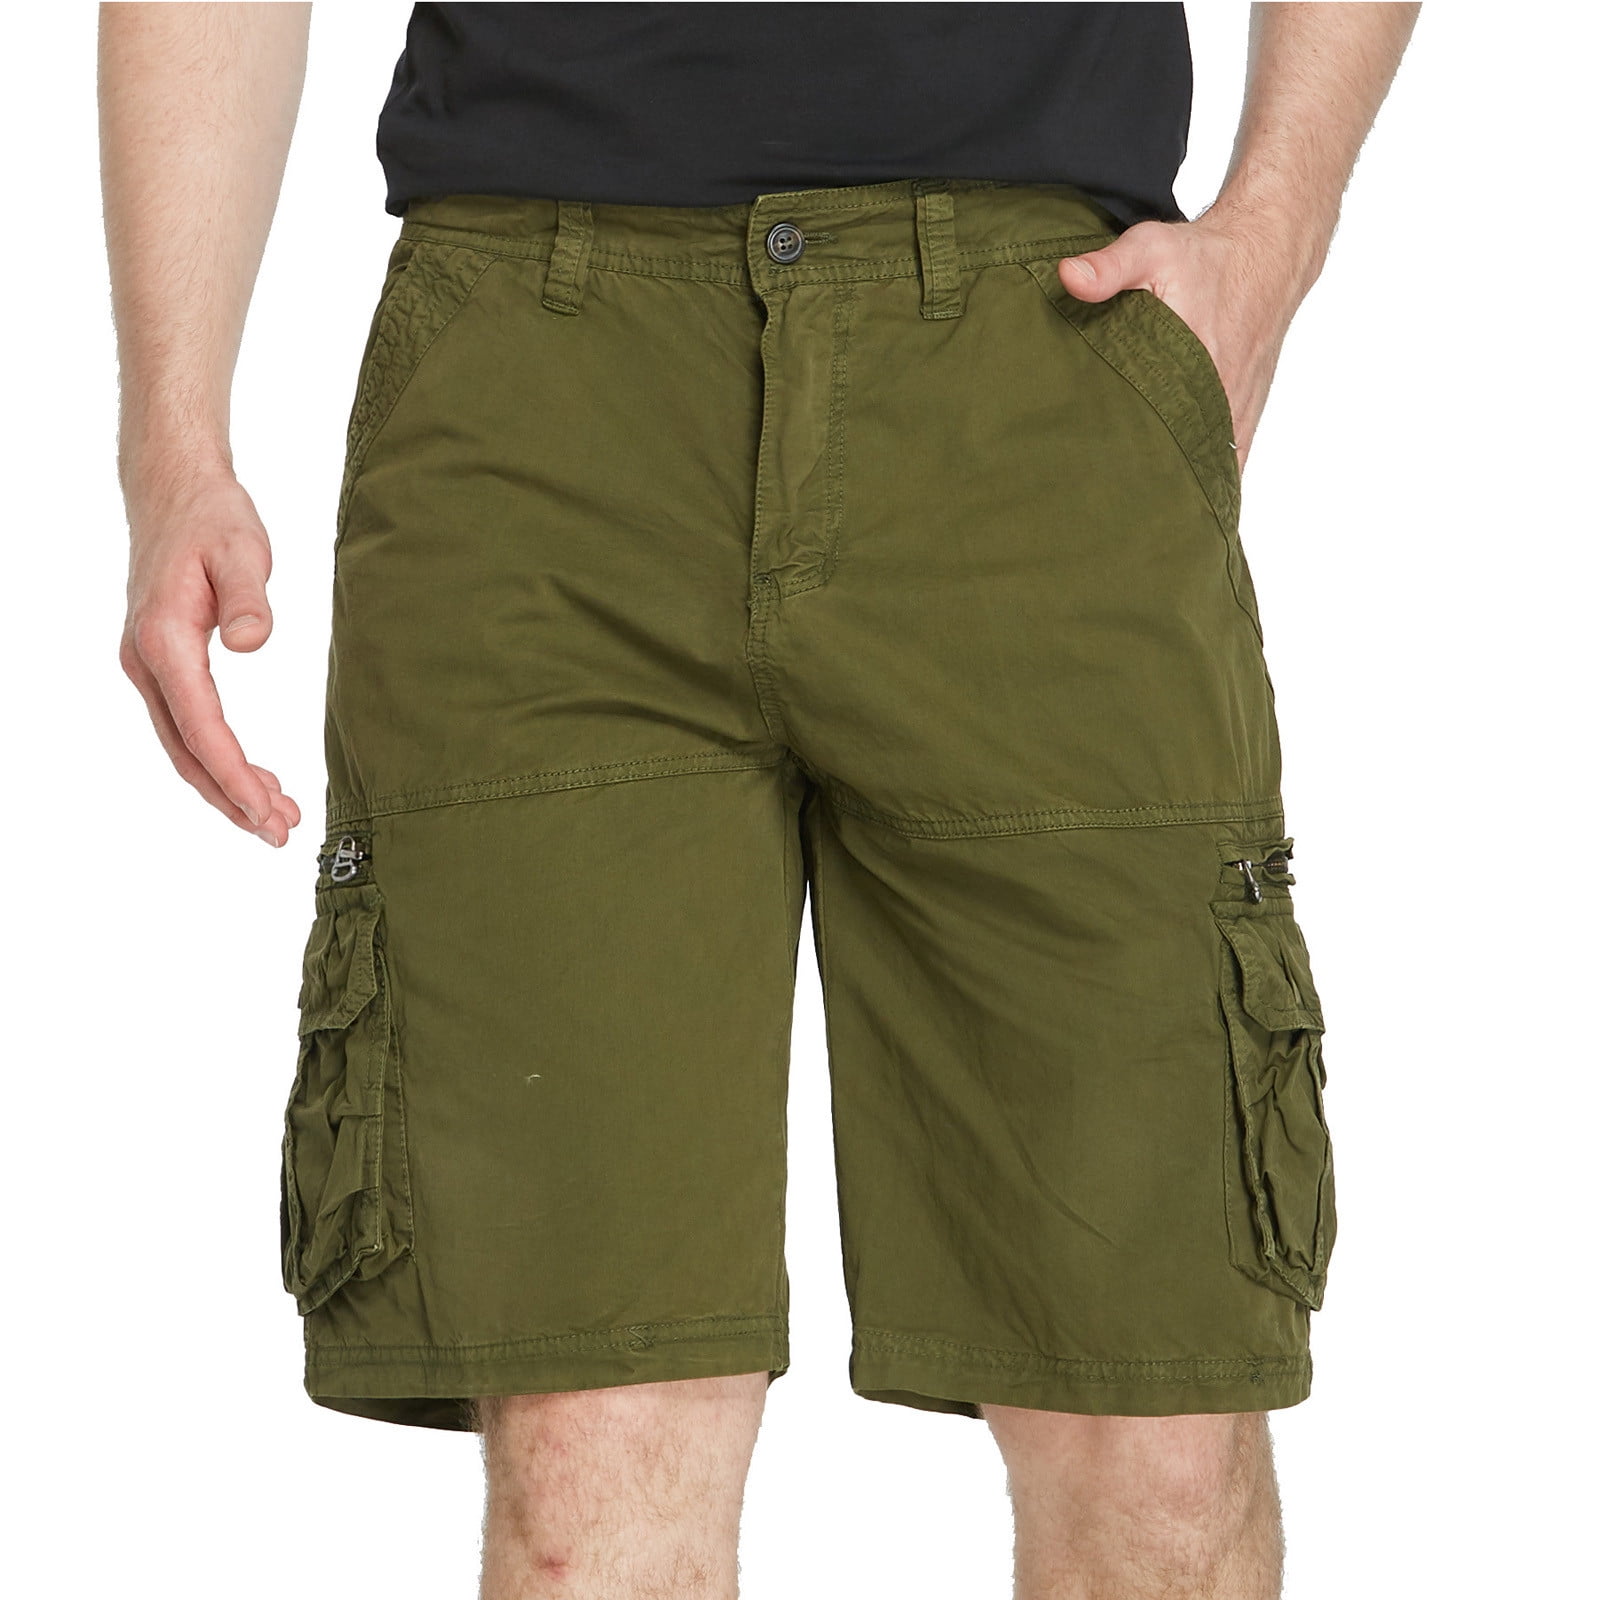 SDNall Cargo Shorts for Men Workwear Shorts Slim Multi Pocket Zipper ...